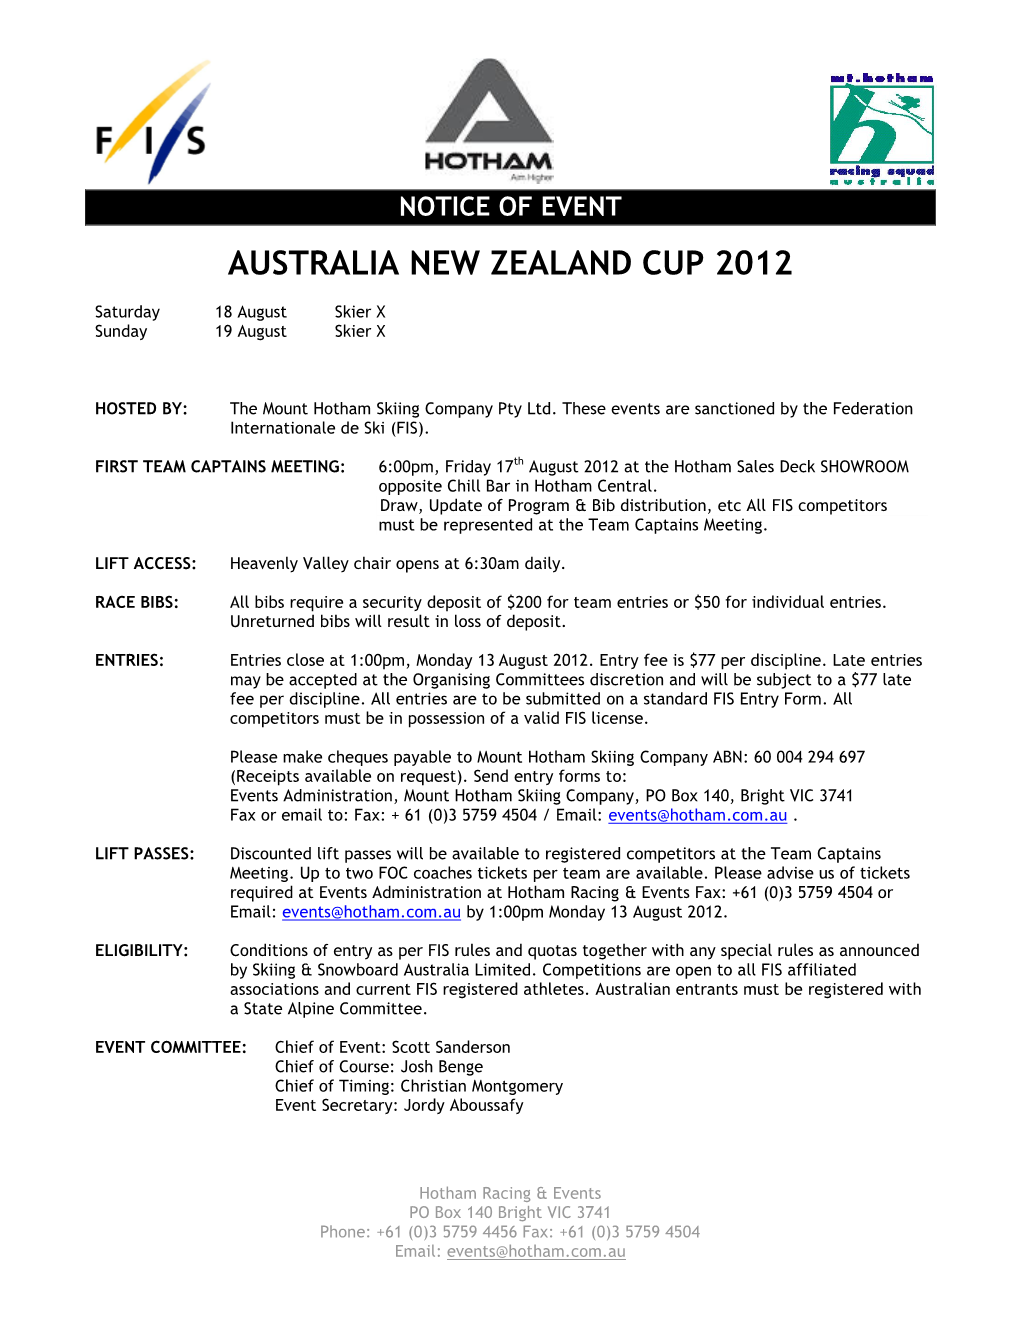 Australia New Zealand Cup 2012